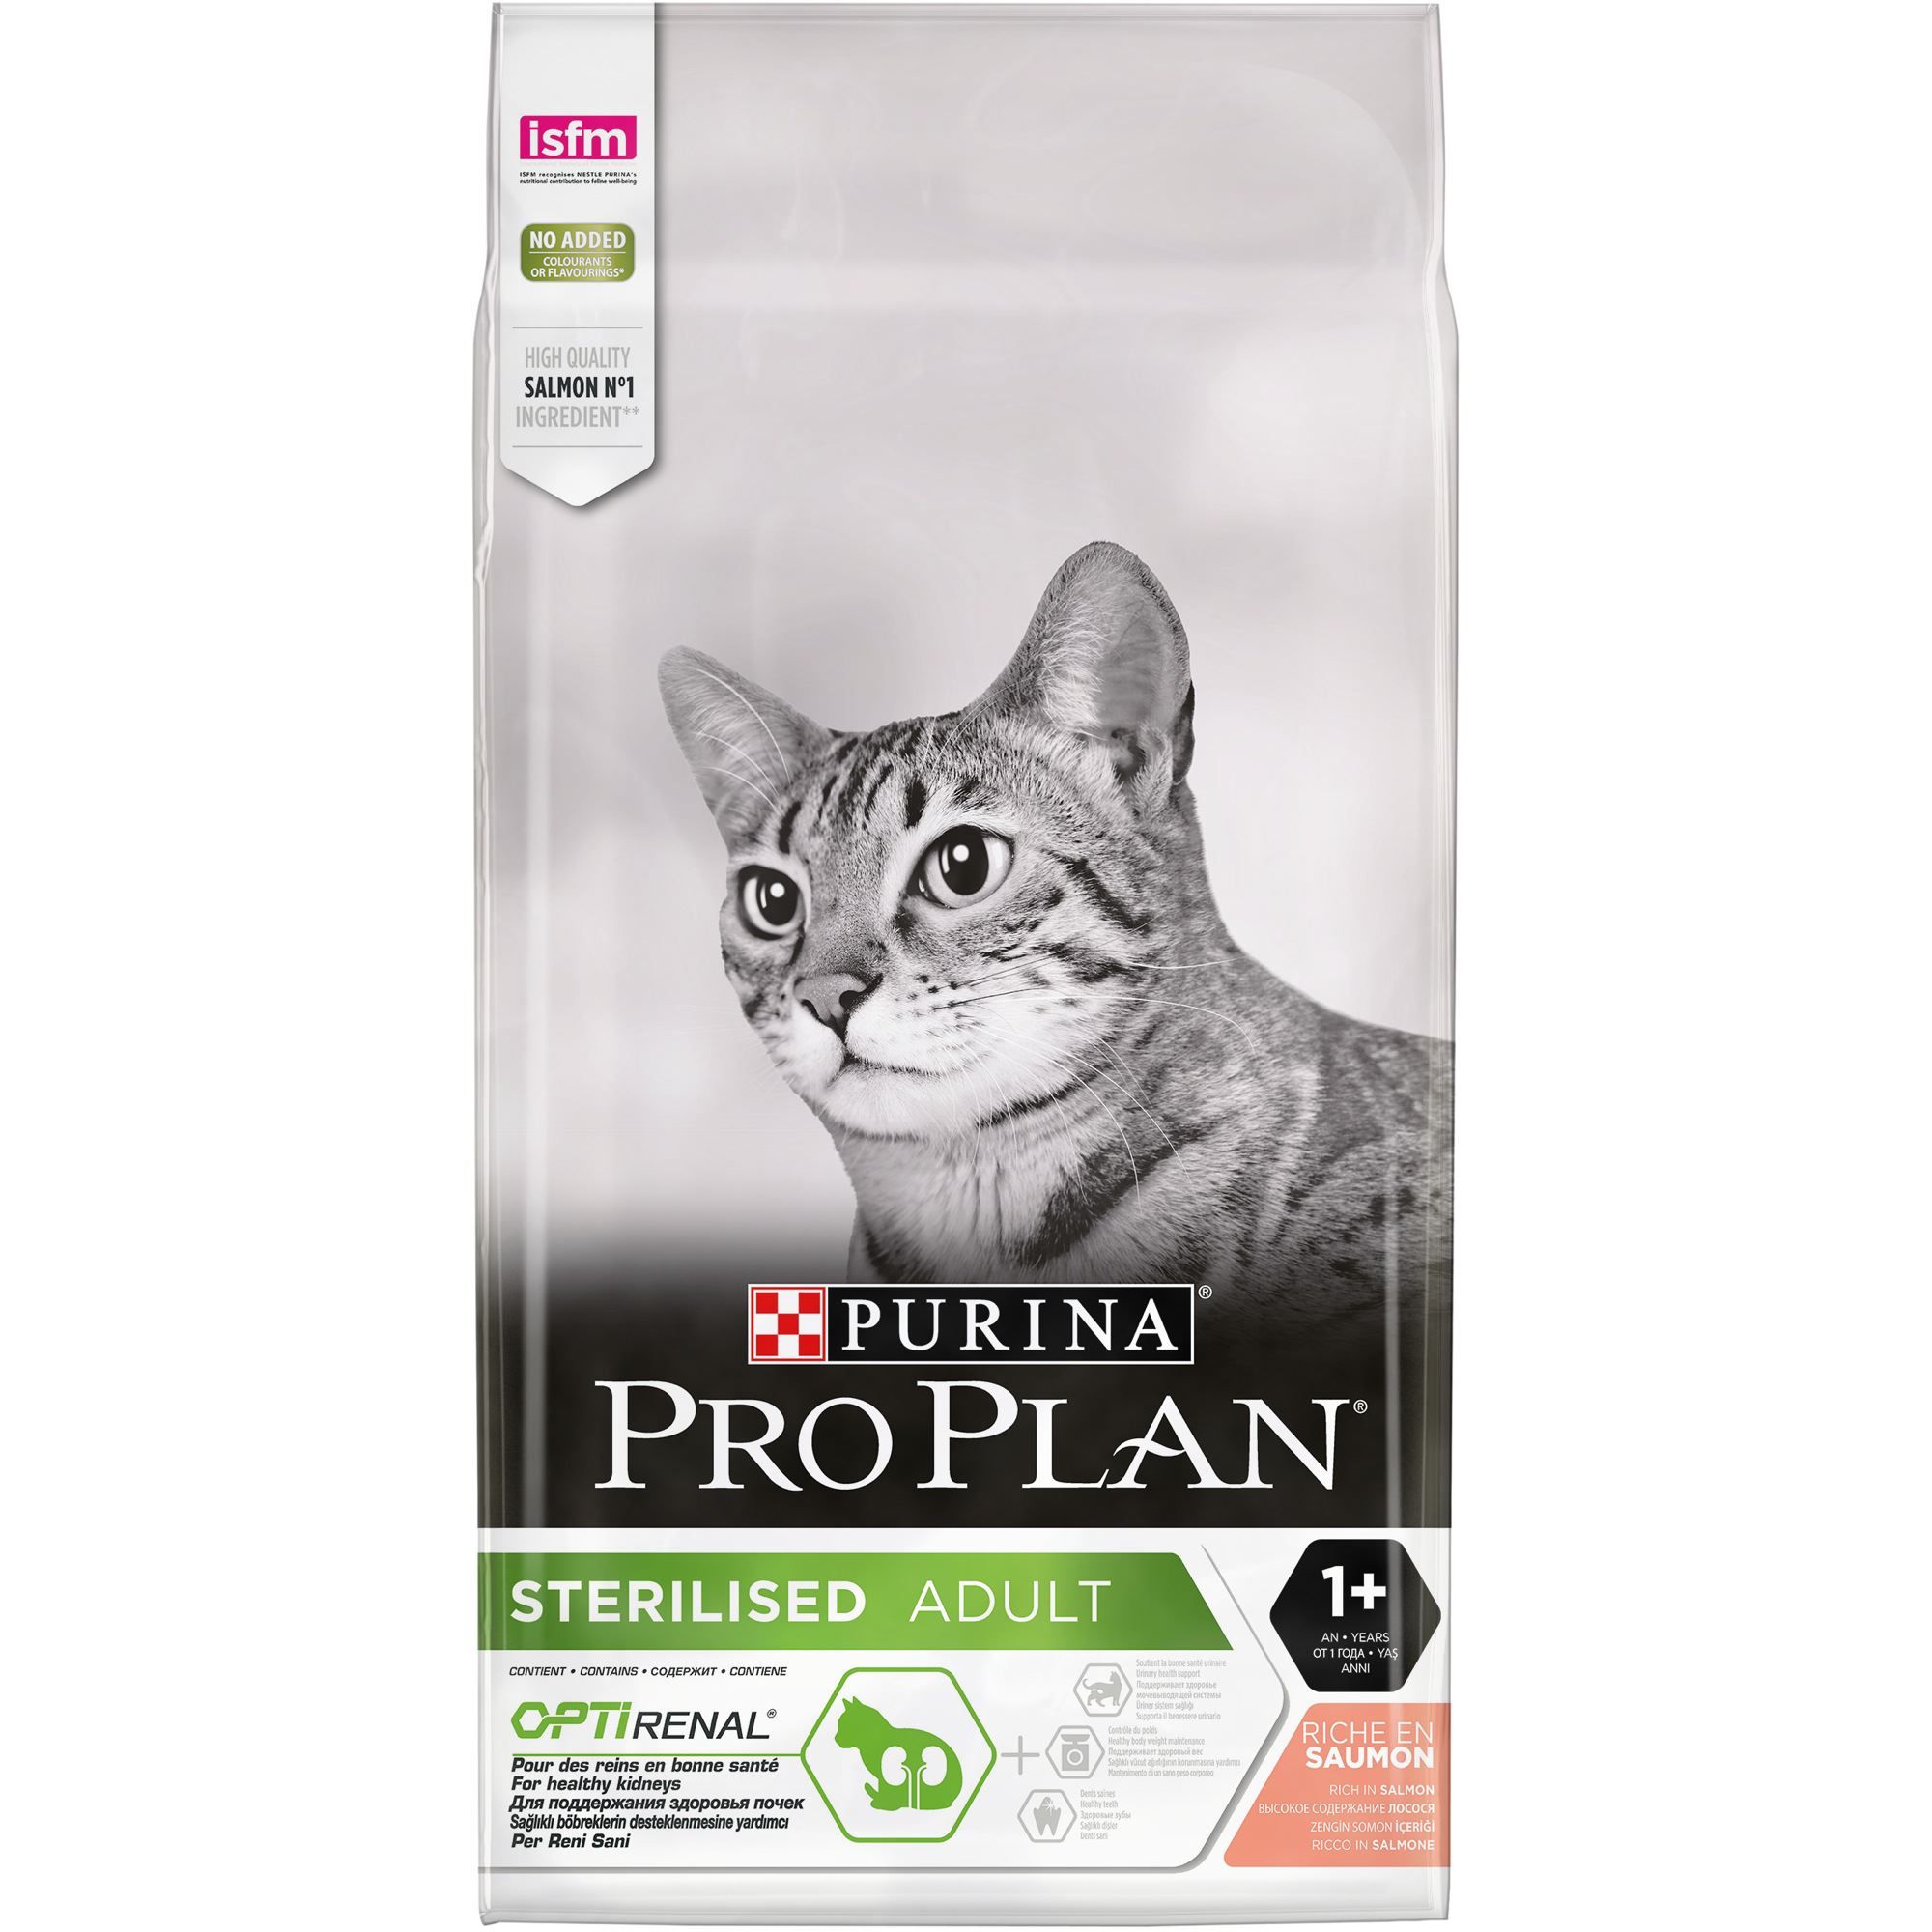 Purina Pro Plan Pisici Sterilizate Optirenal cu Somon 10 kg Purina